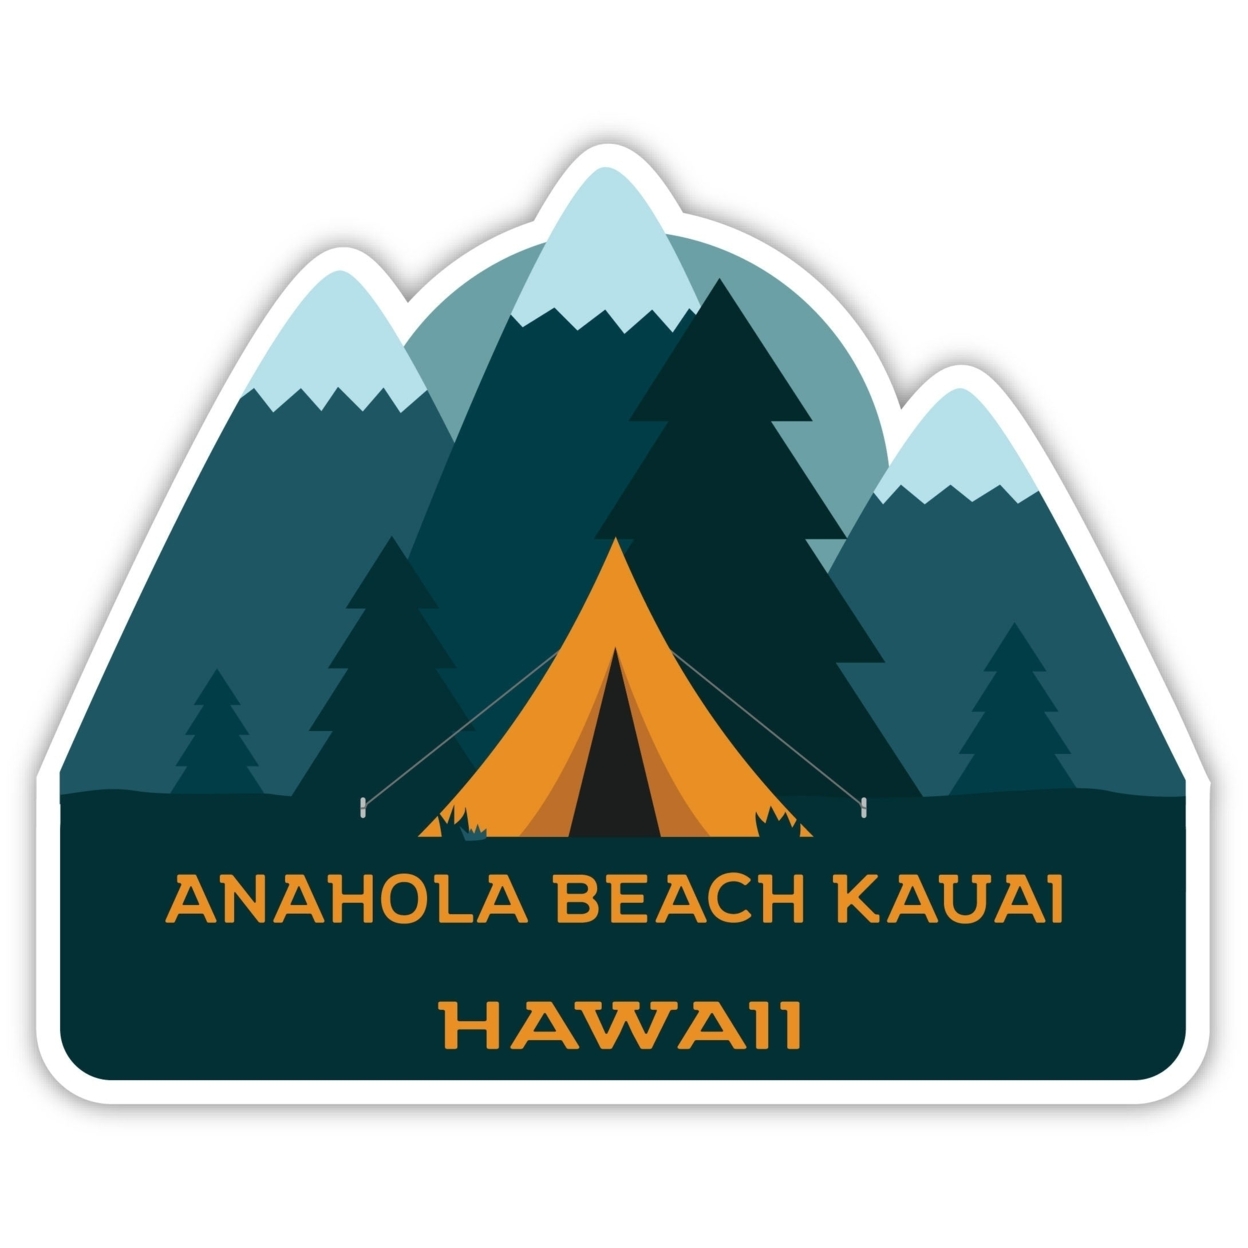 Anahola Beach Kauai Hawaii Souvenir Decorative Stickers (Choose Theme And Size) - 4-Pack, 2-Inch, Tent